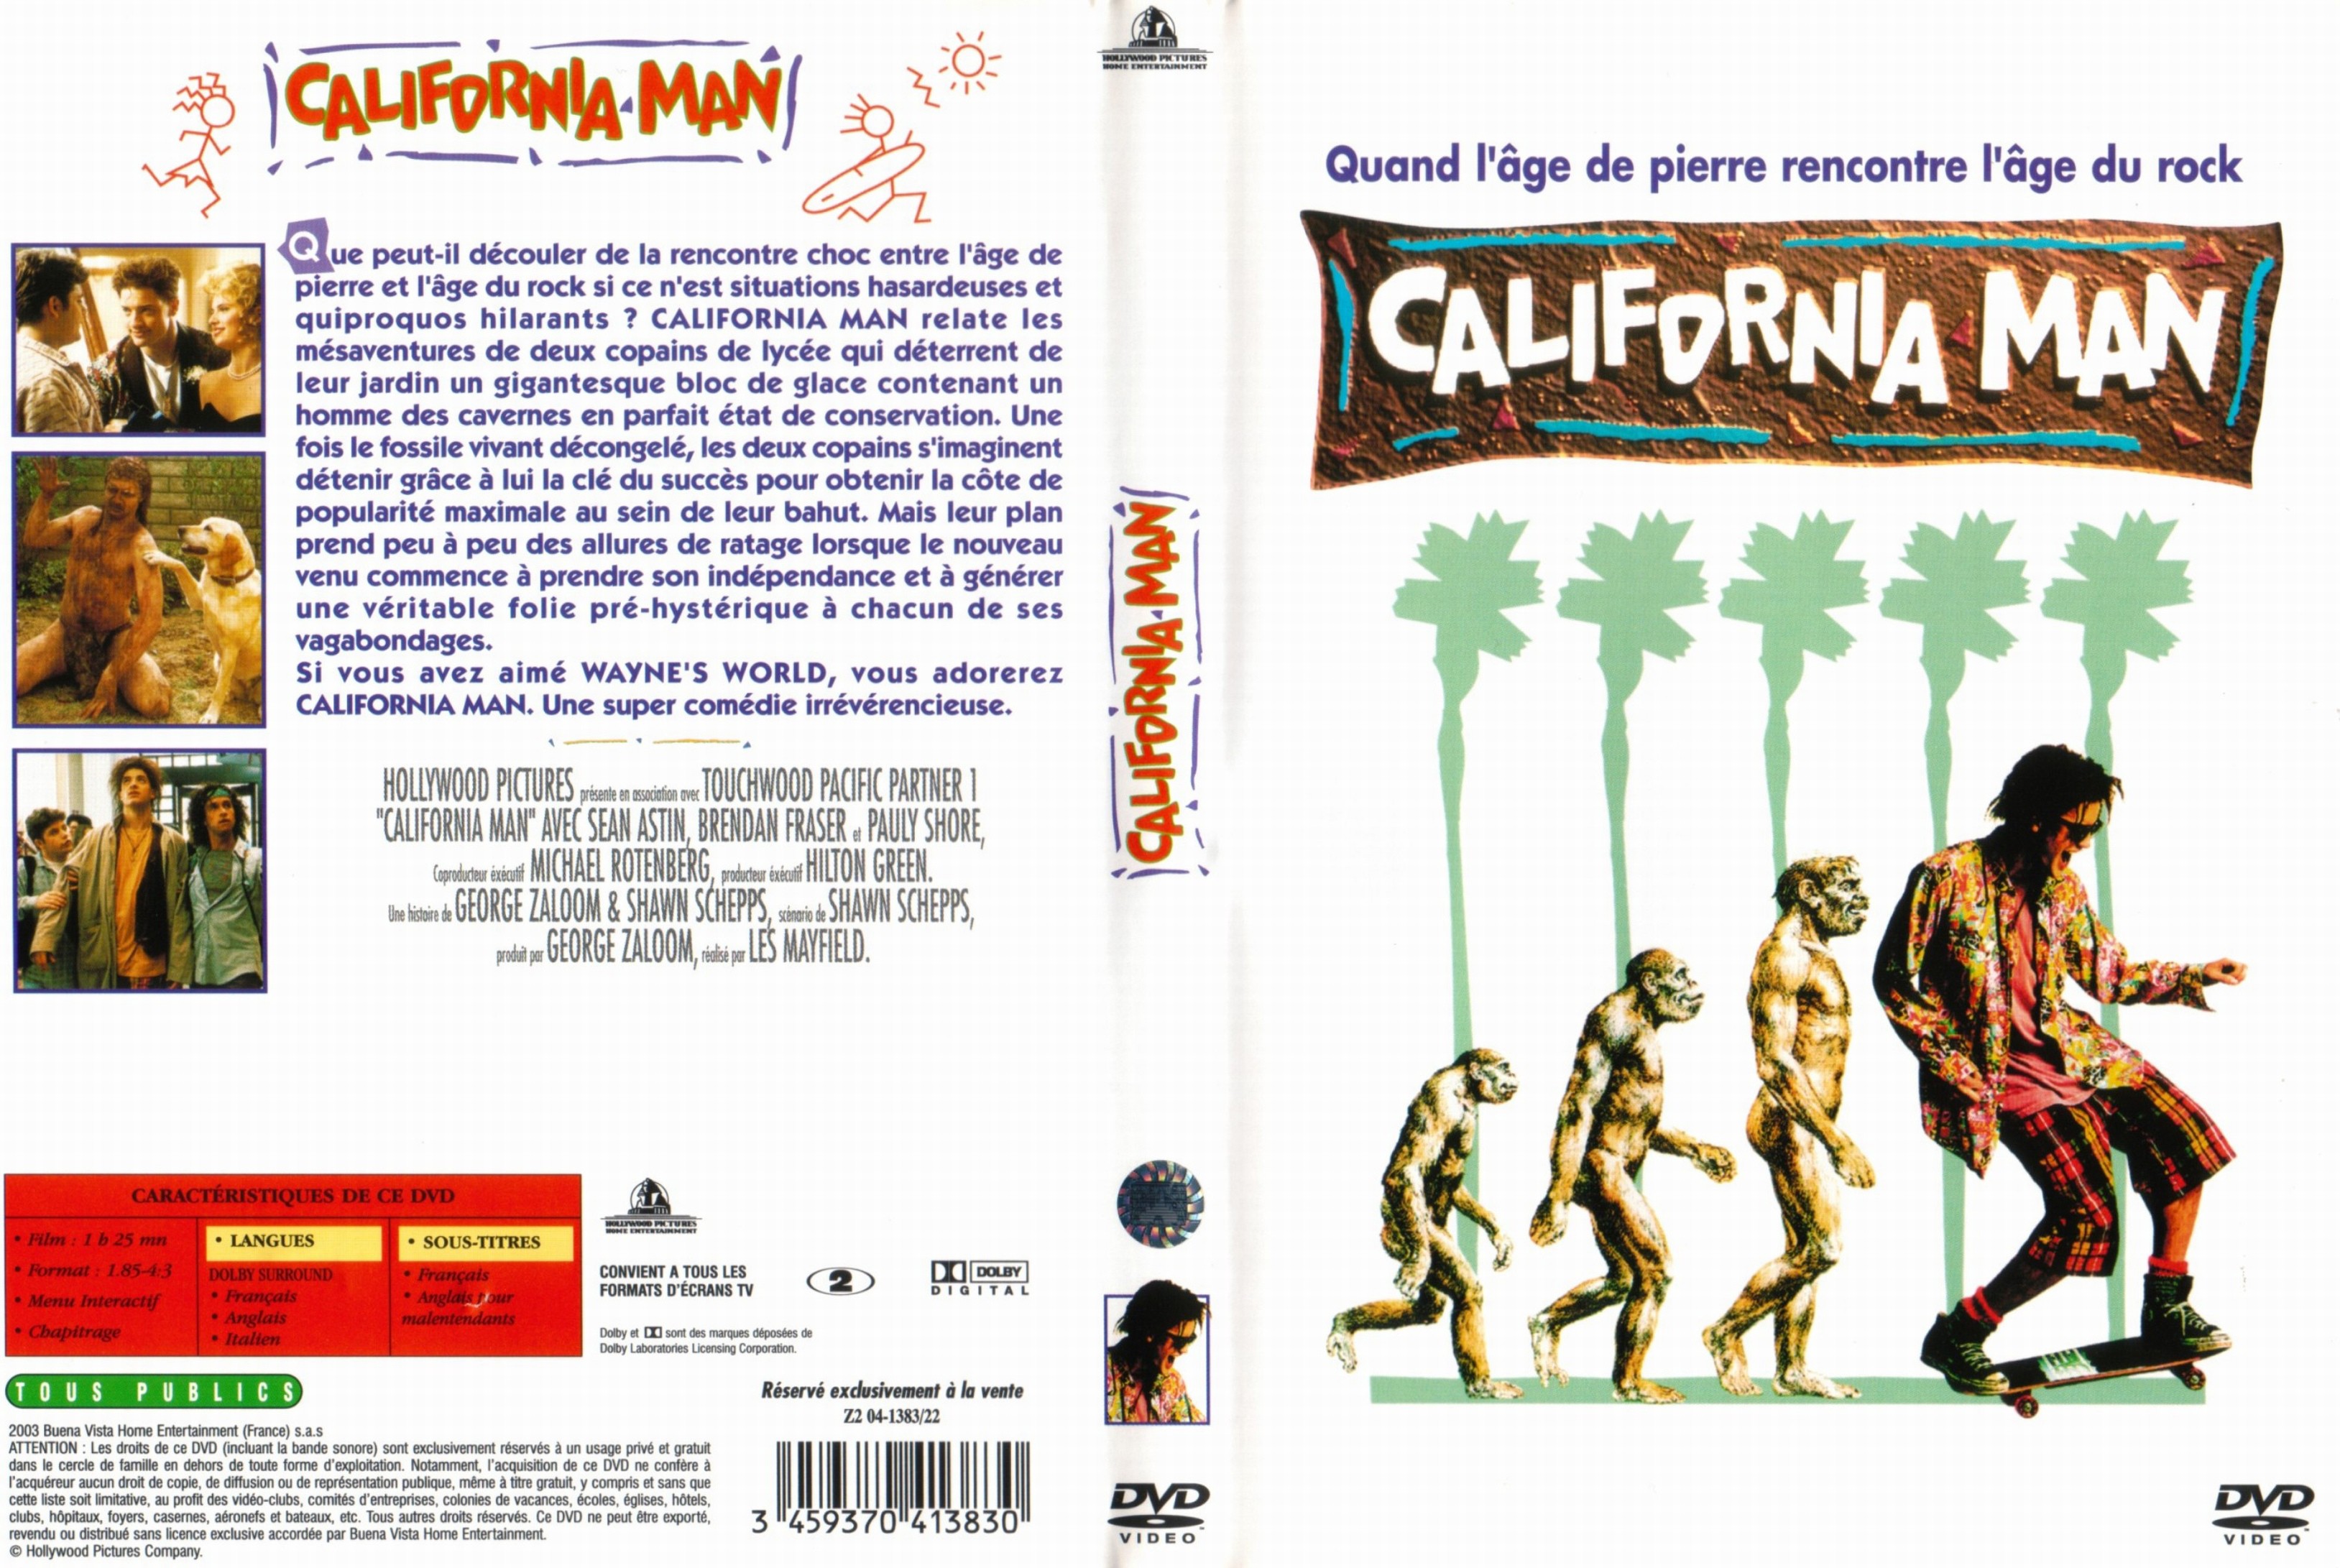 Jaquette DVD California man